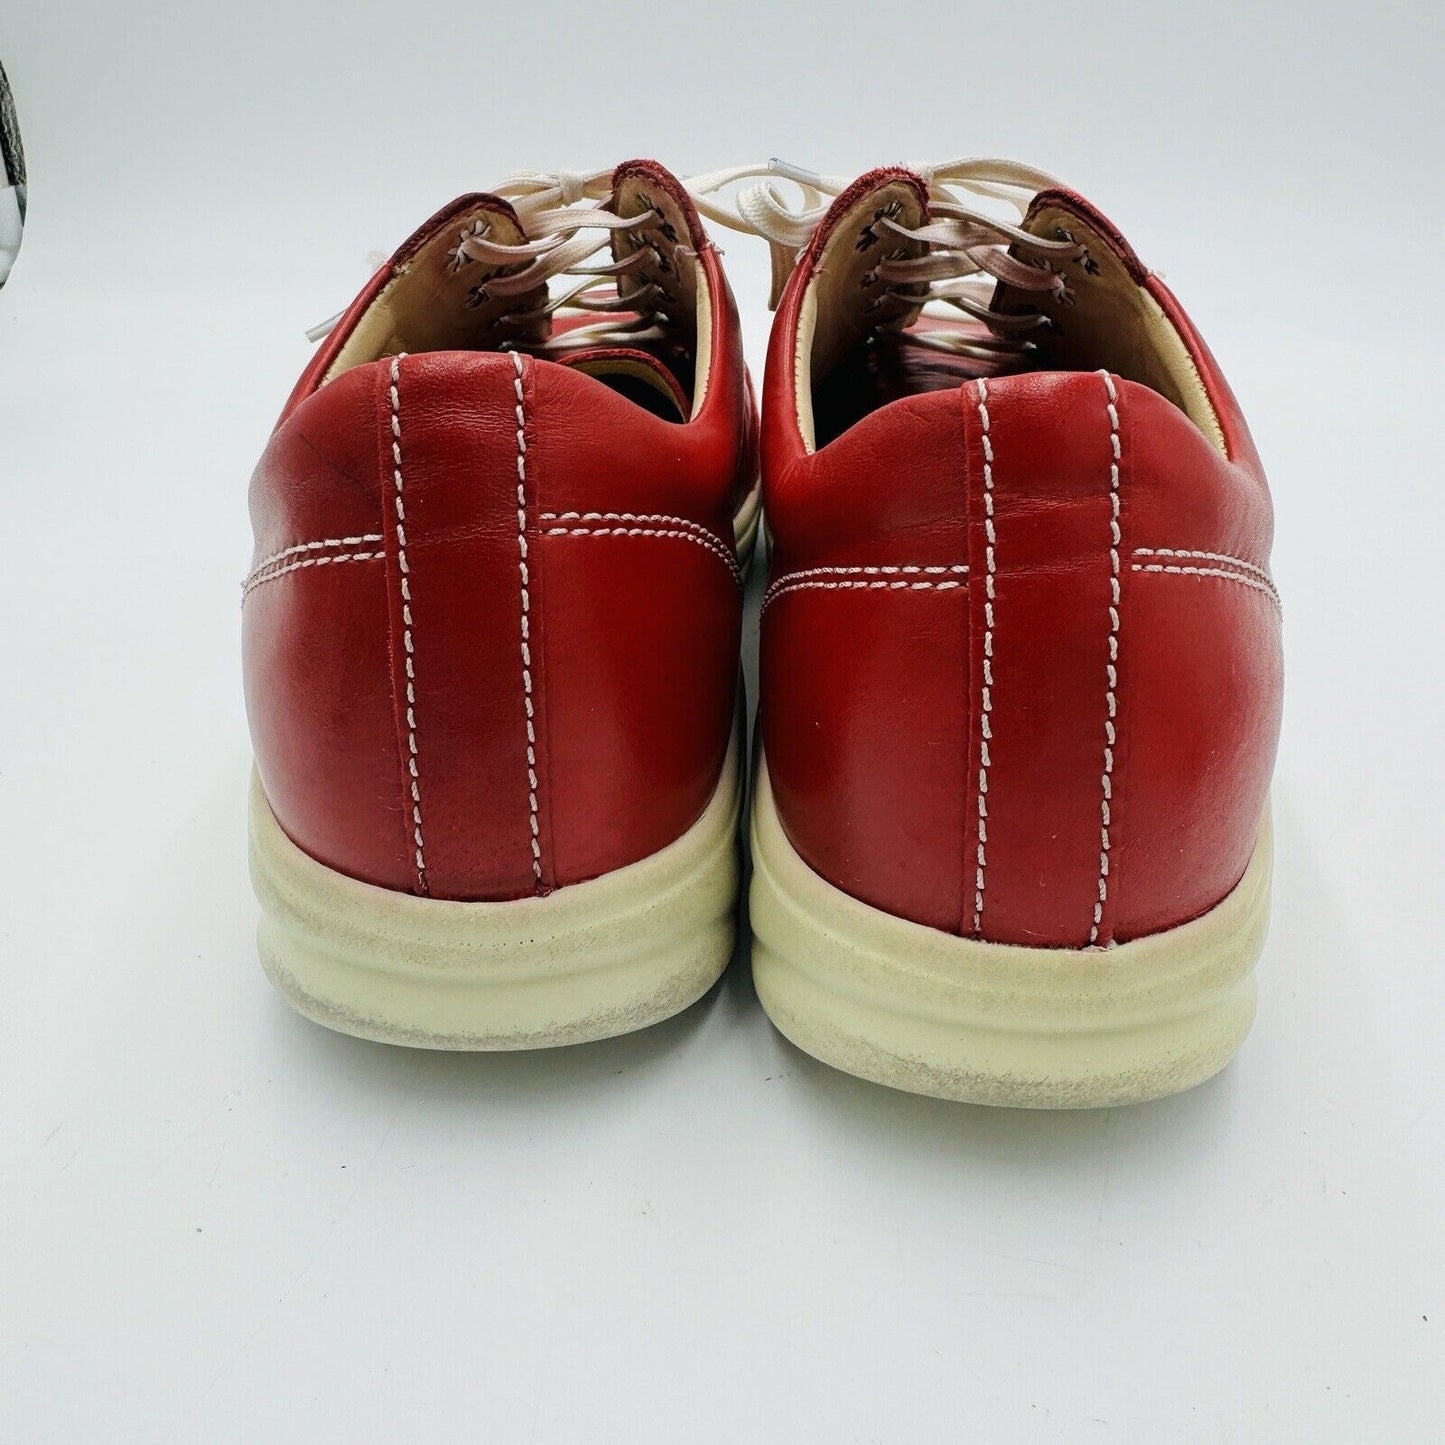 Finn Comfort Germany Ikebukuro Red Casual Women Oxford Shoes US Size 41/2 W